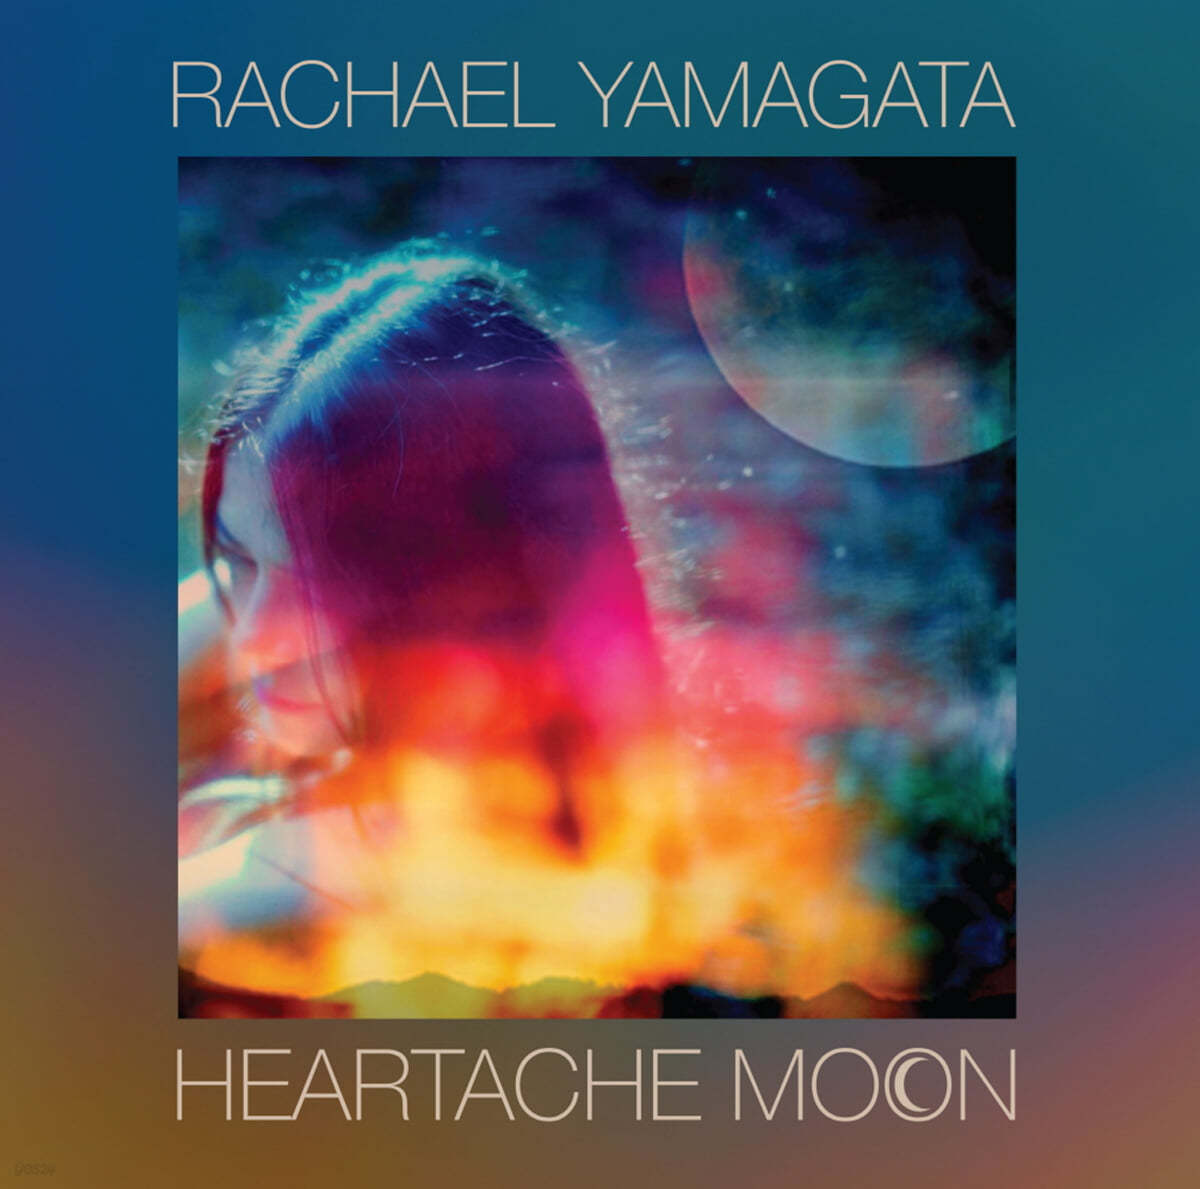 Rachael Yamagata (레이첼 야마가타) - Heartache Moon [LP] 